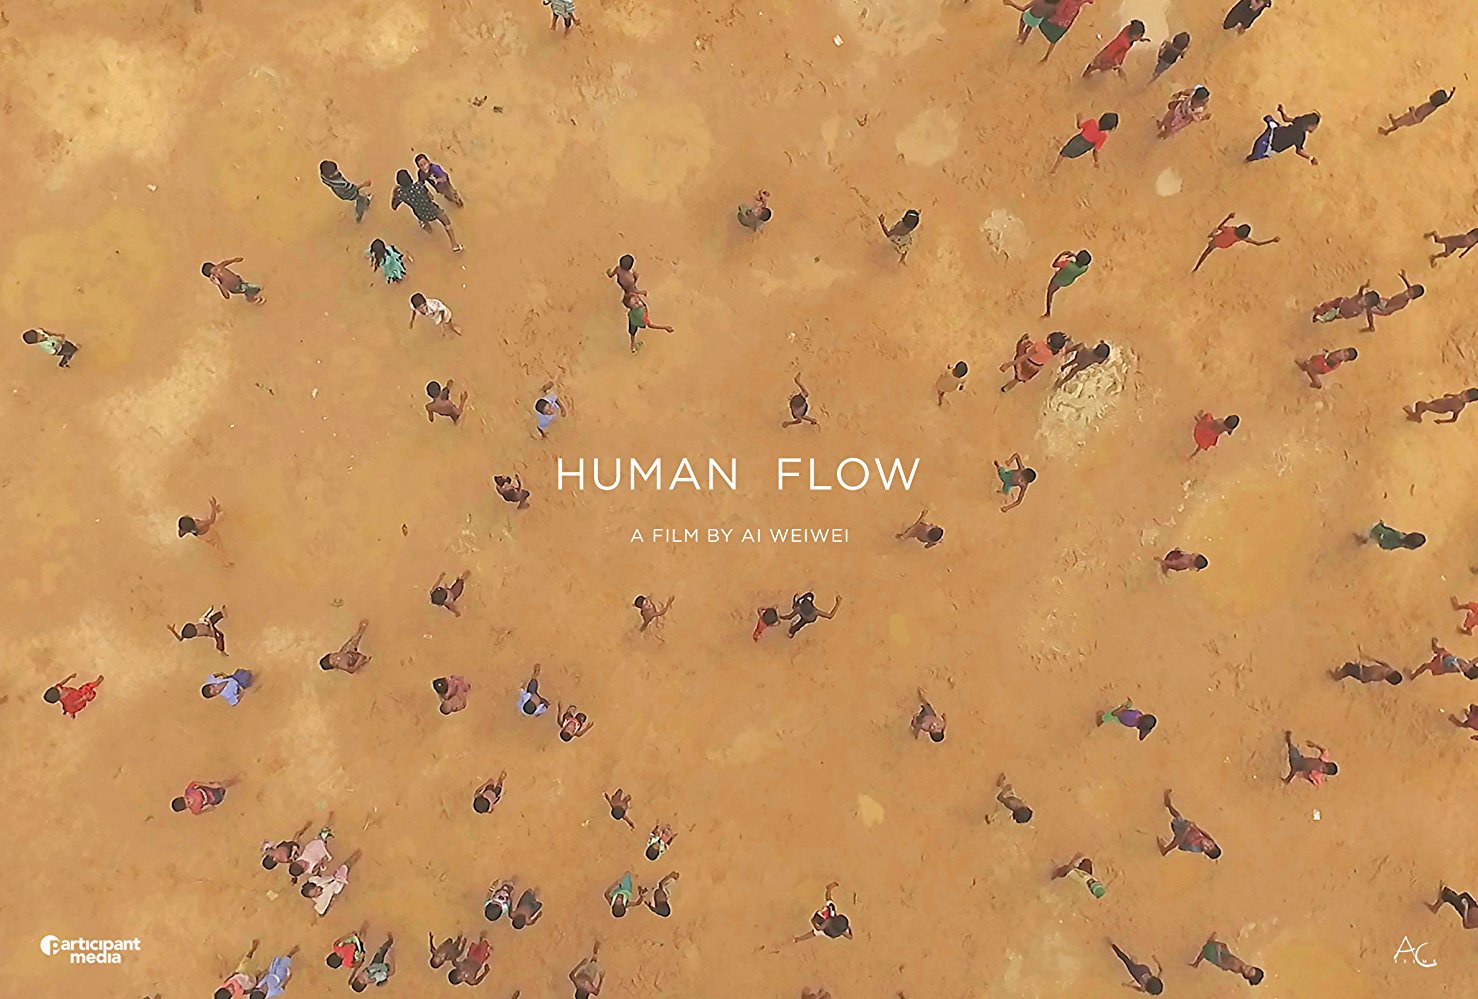 HUMAN FLOW TRAILER